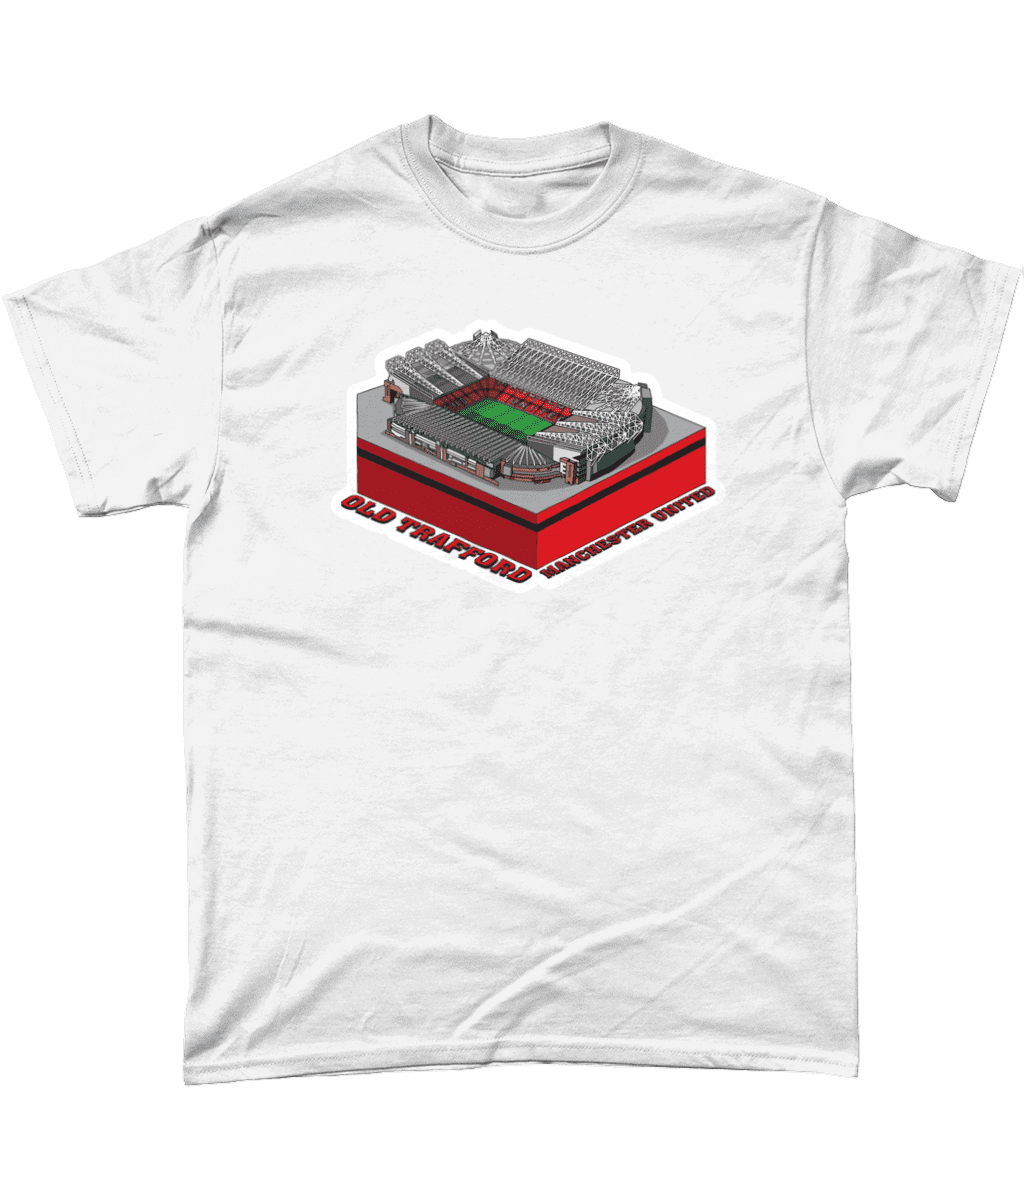 Manchester United old Trafford Football Stadium Illustration T Shirt White